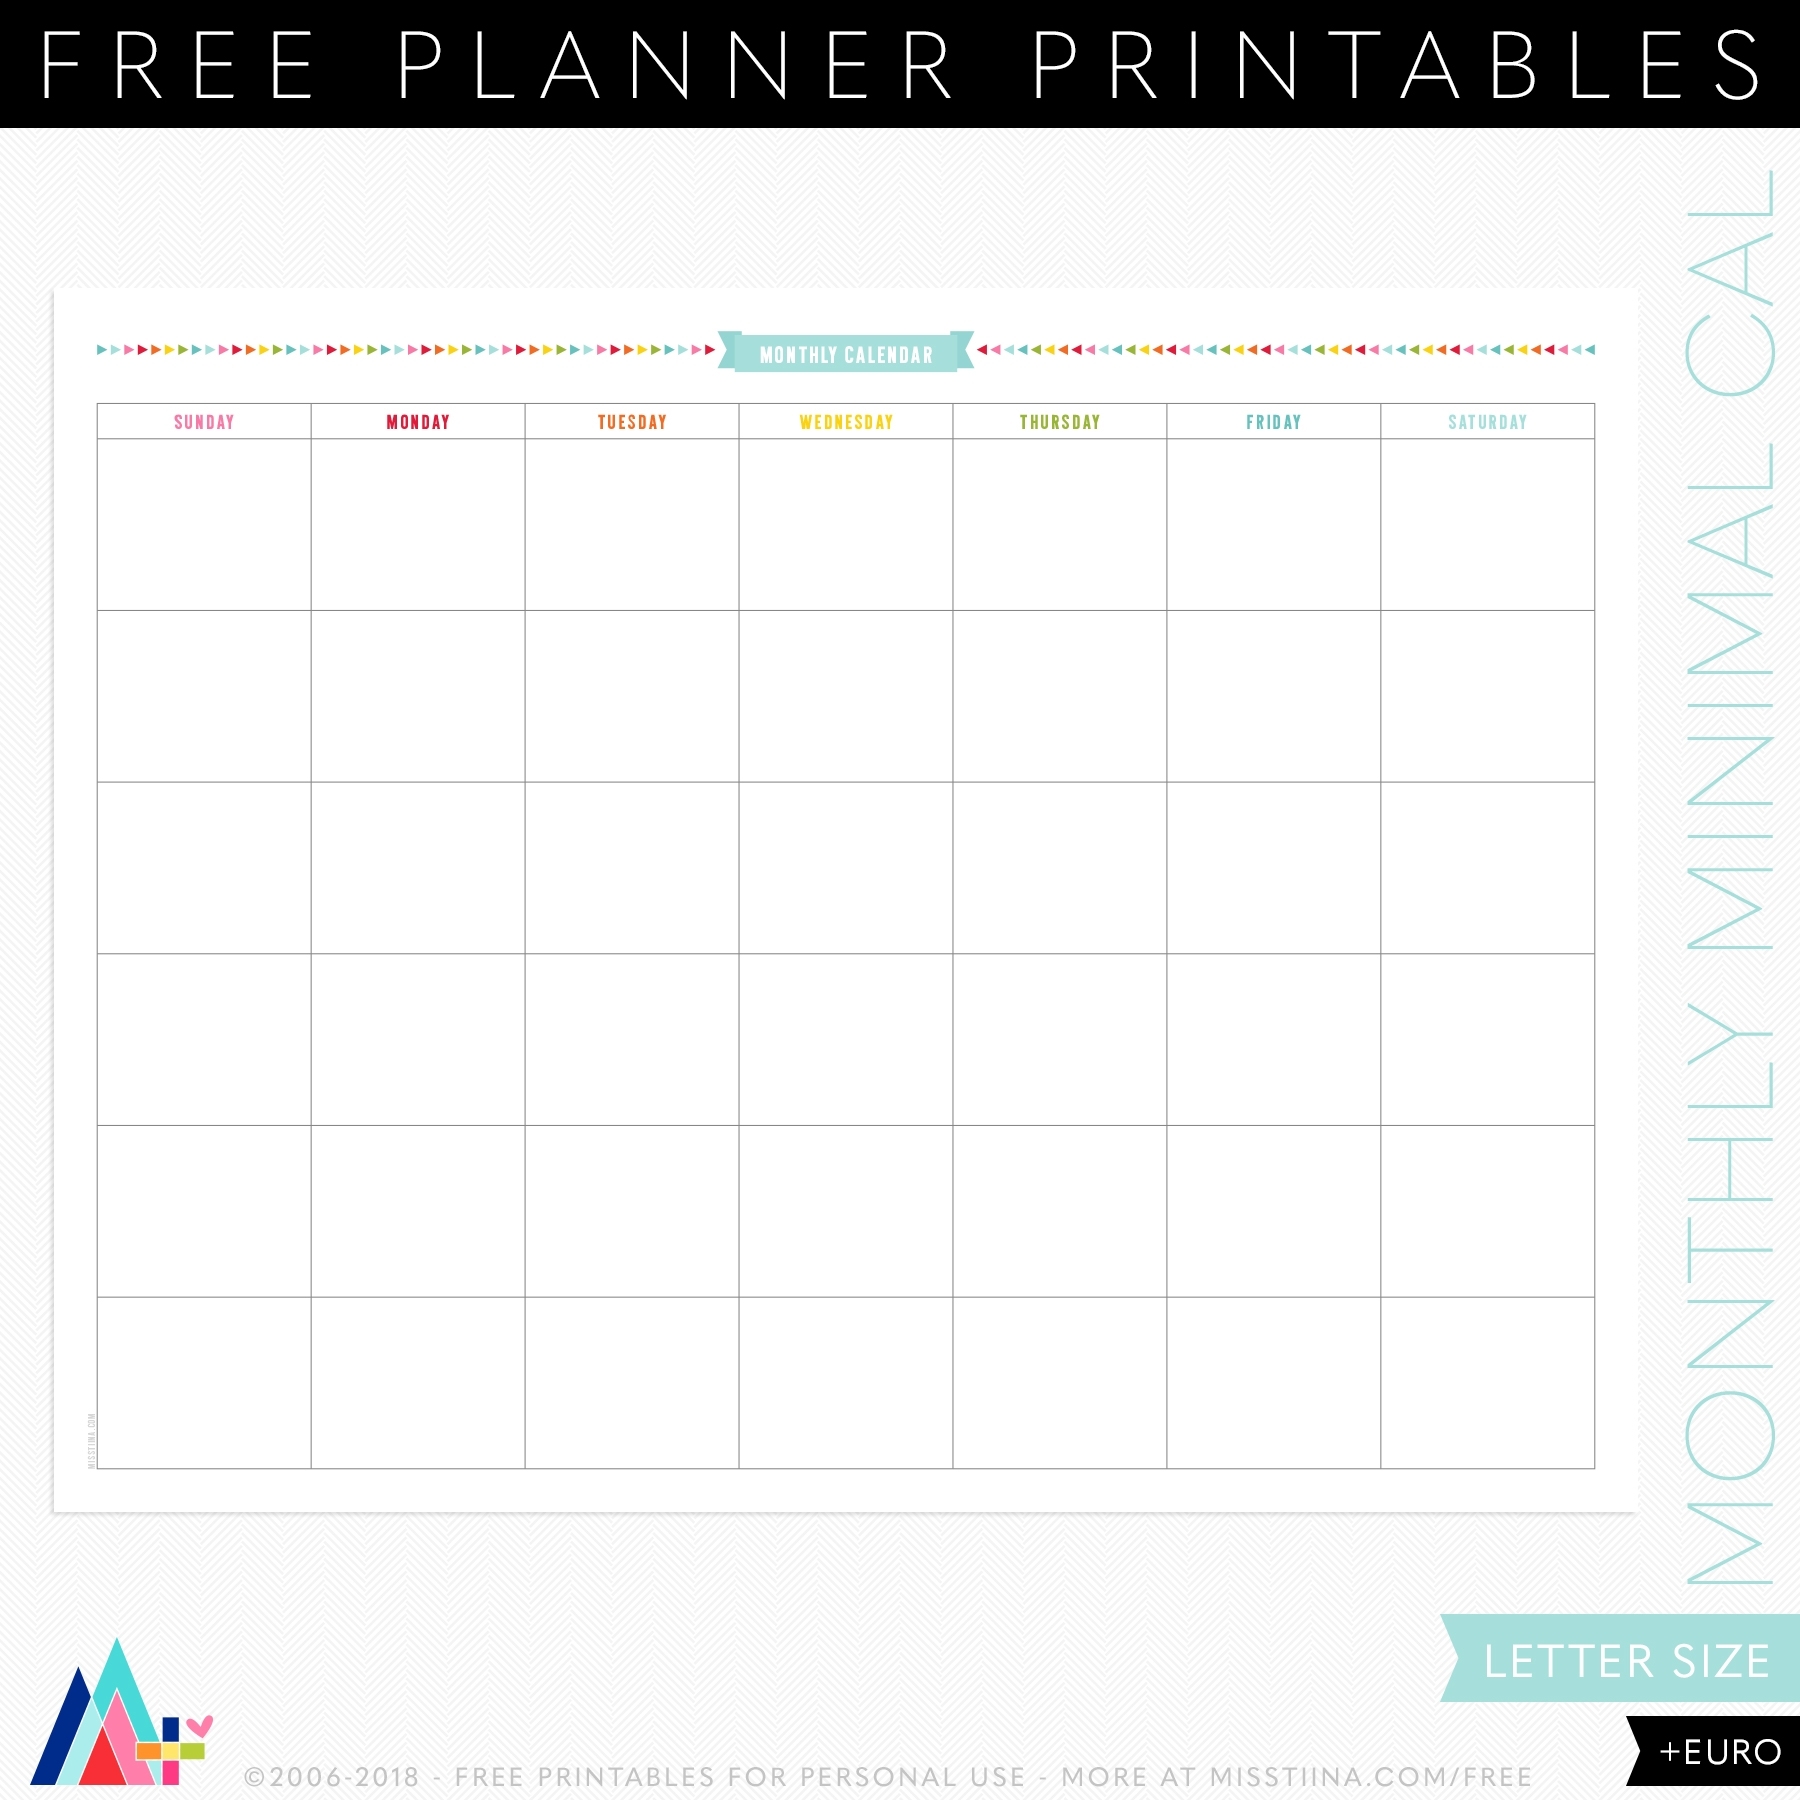 Printables | Misstiina pertaining to Undated Printable Monthly Calendar Free